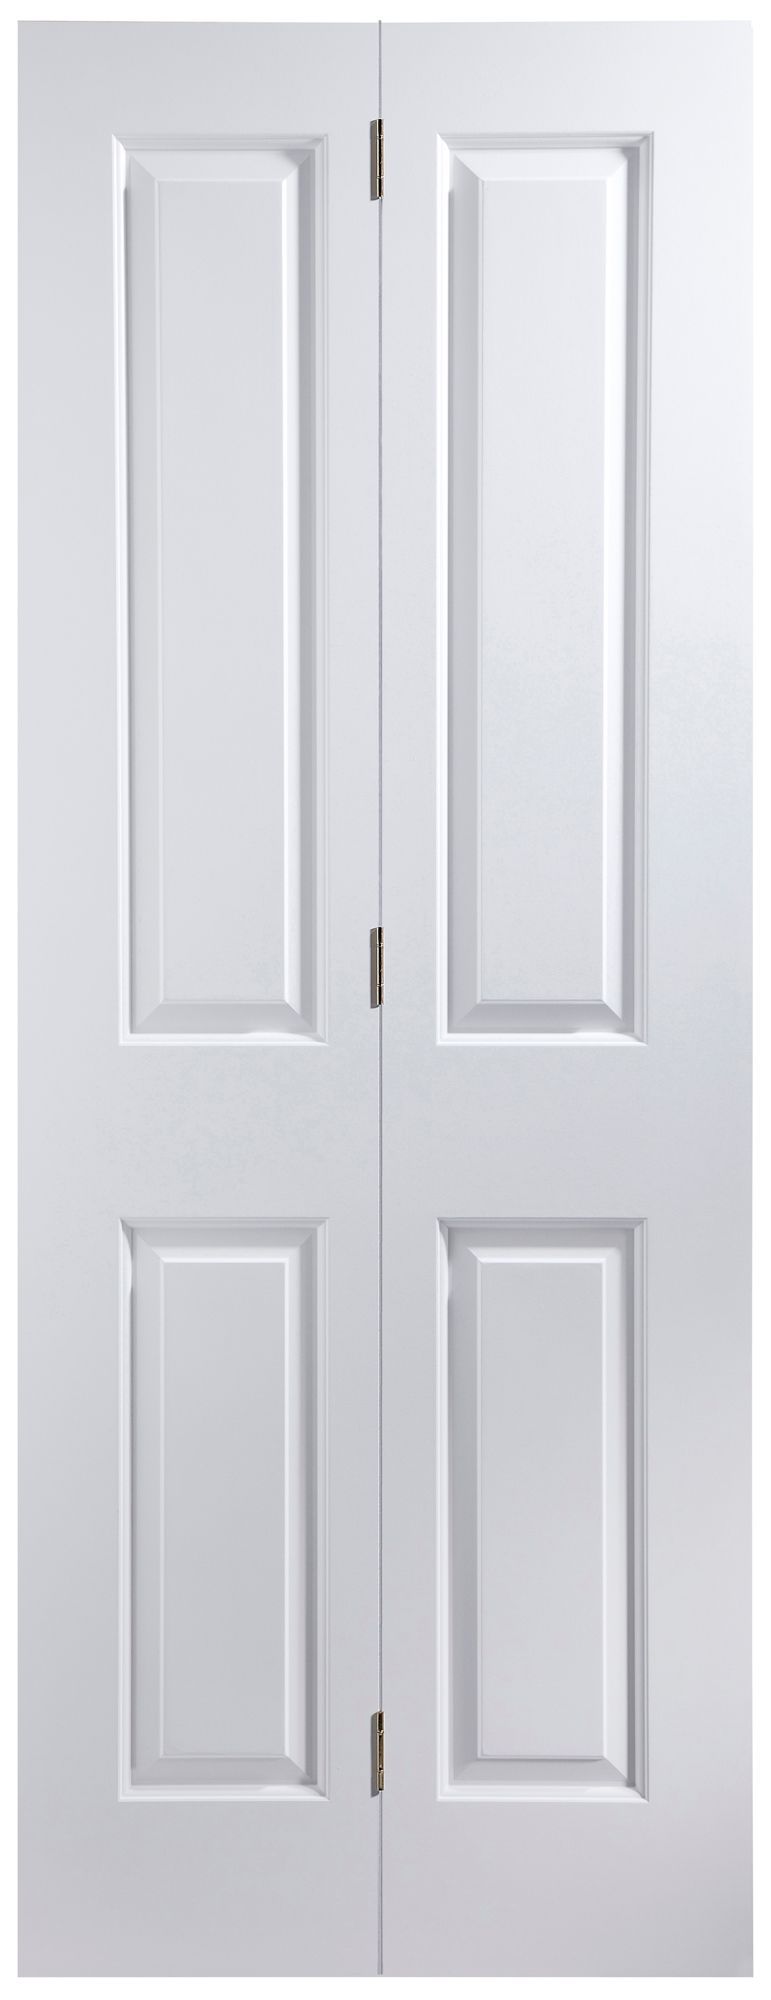 4 panel Unglazed White Internal Bi-fold Door set, (H)1950mm (W)750mm